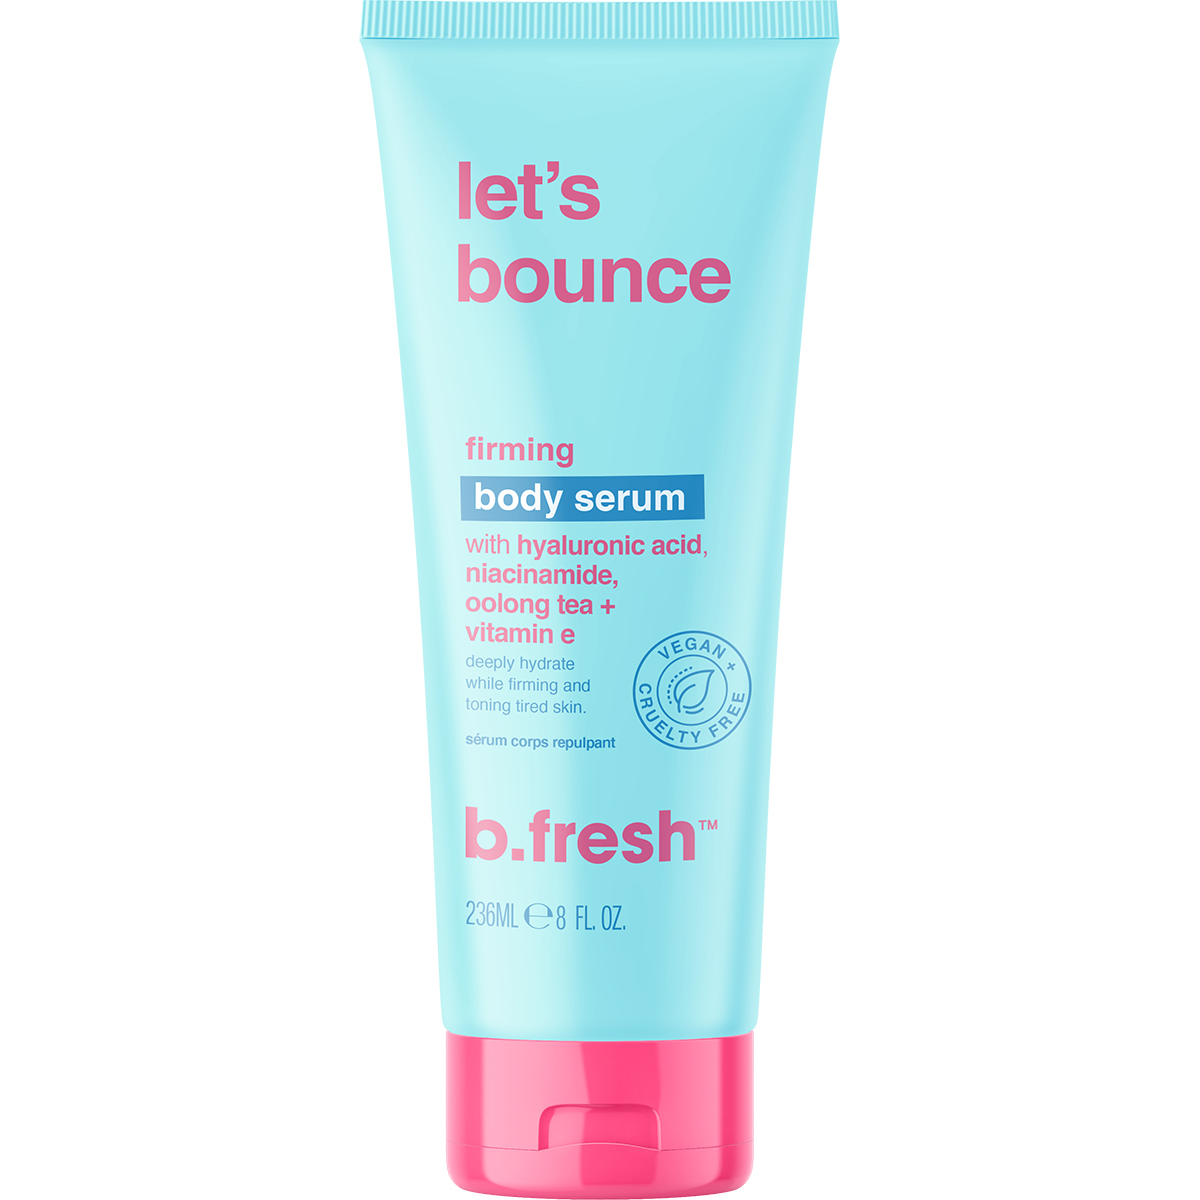 B.fresh Let's Bounce Body Serum